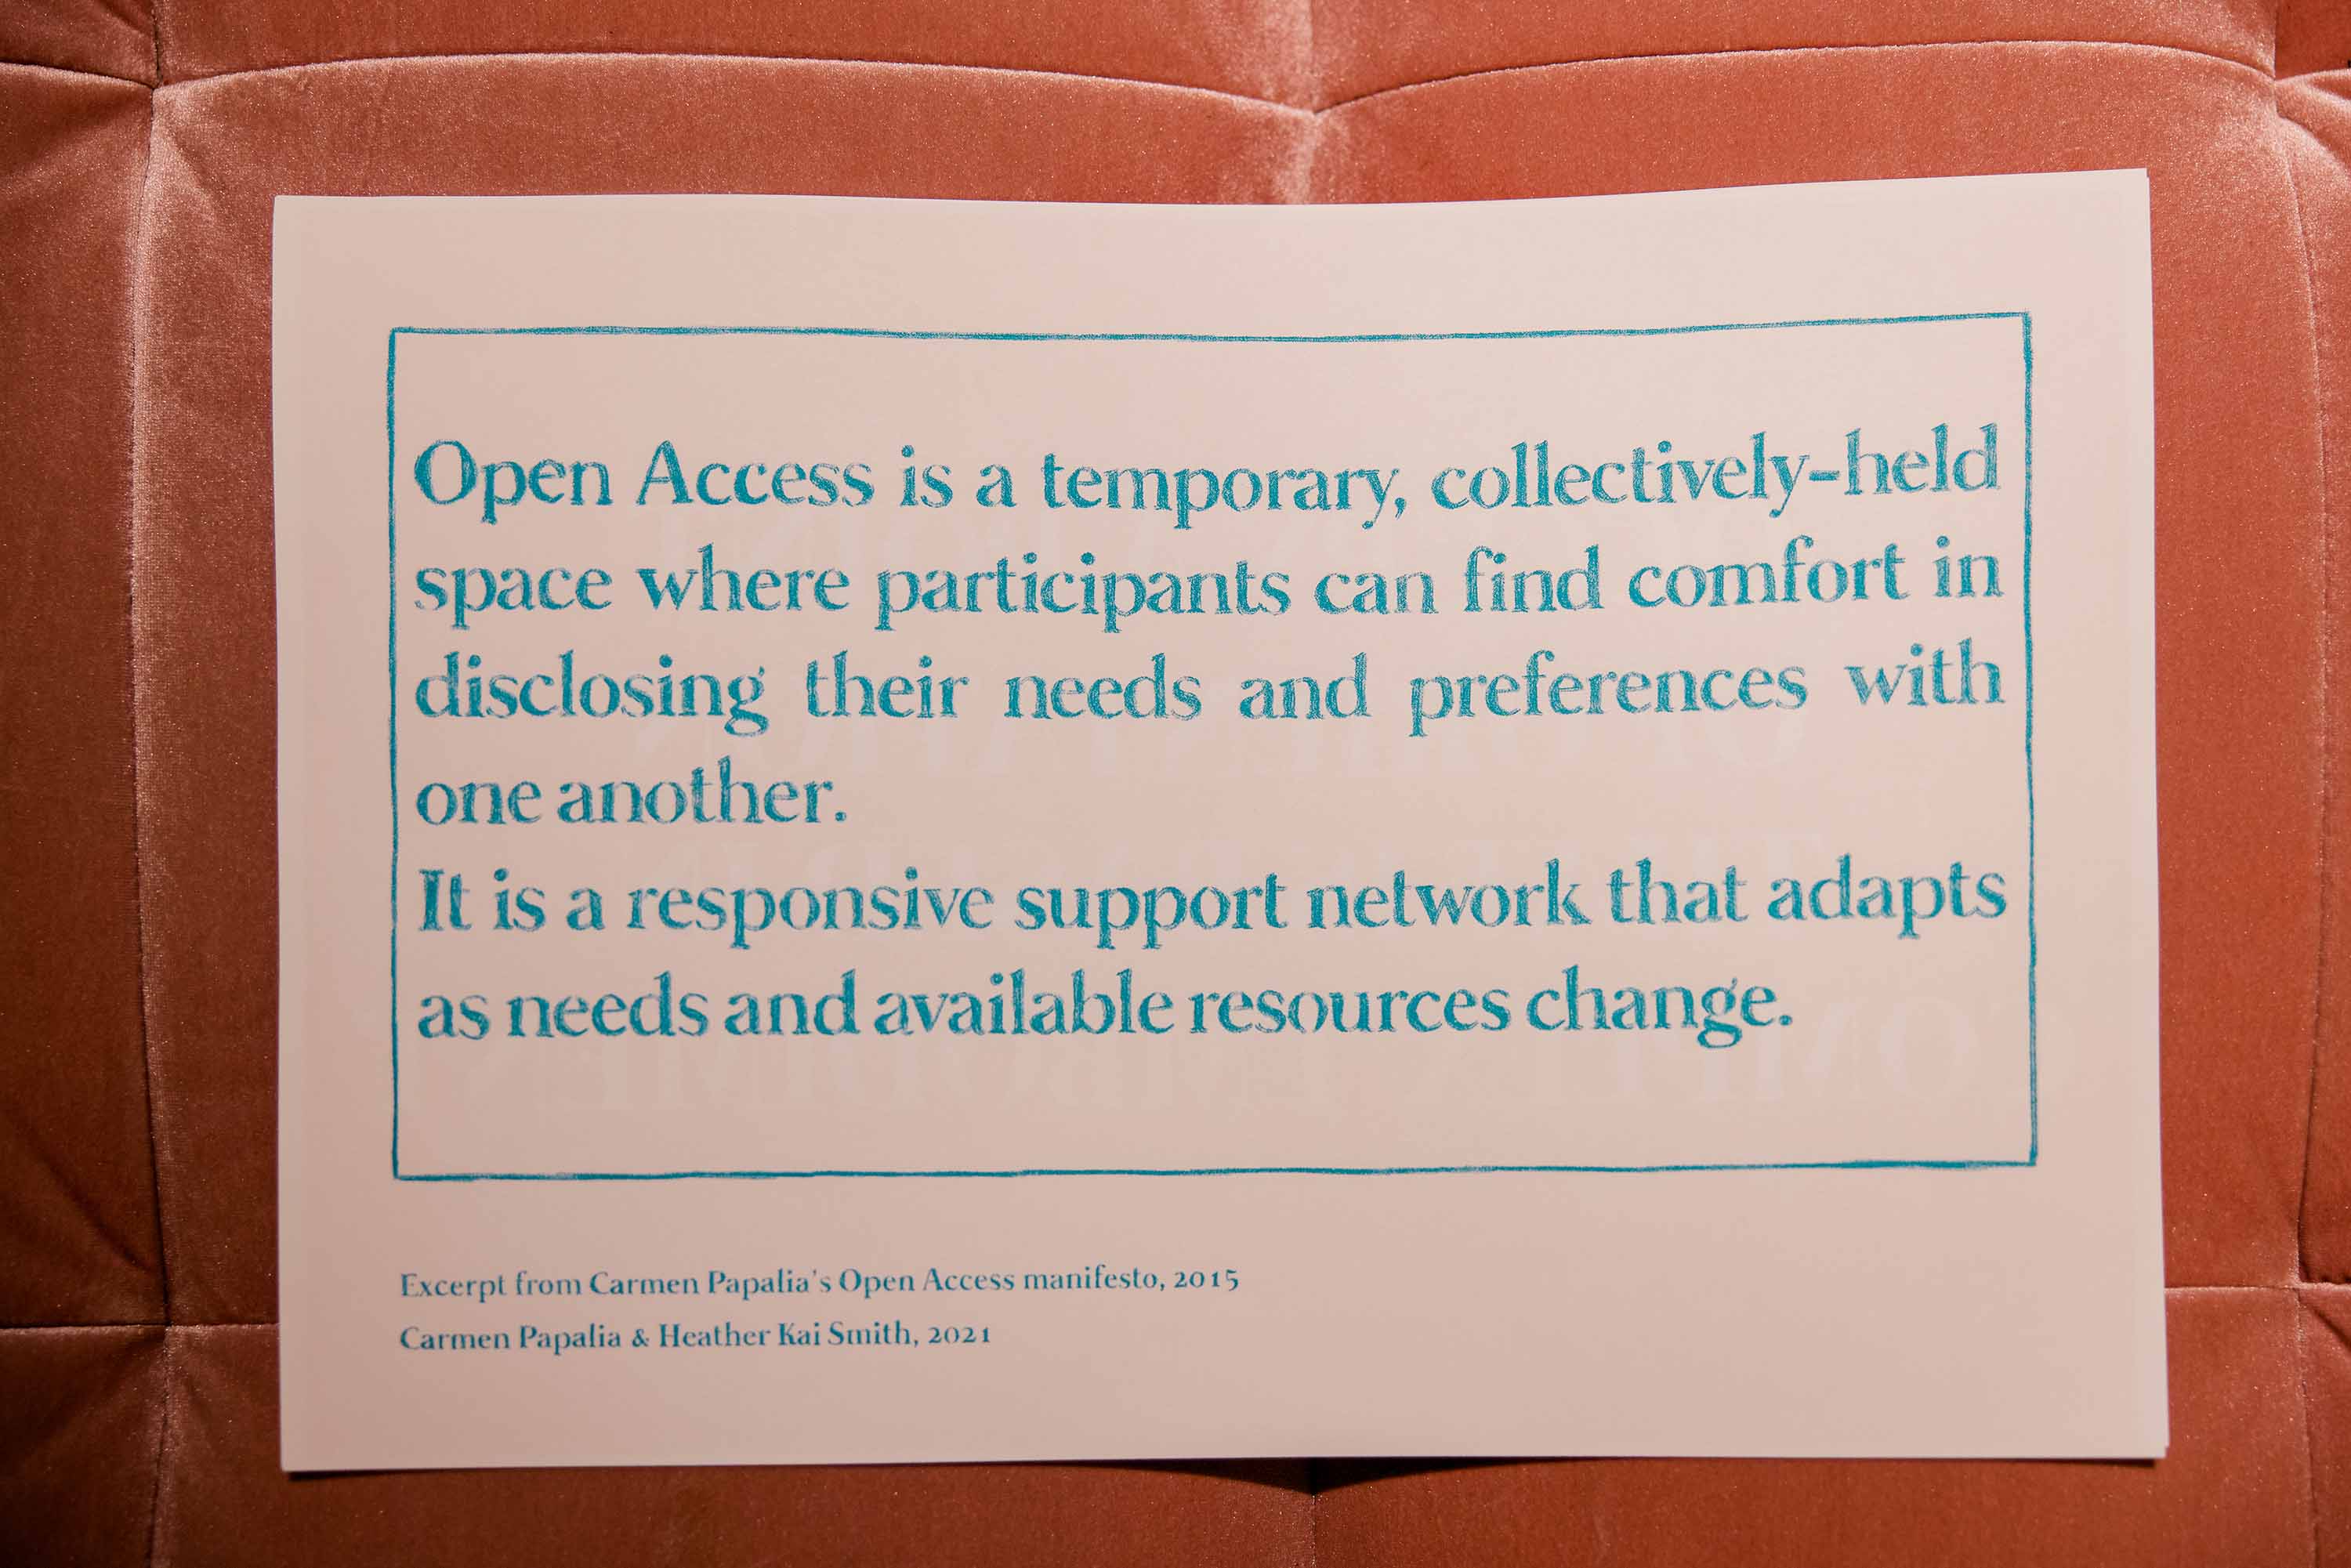 Open Access text description.